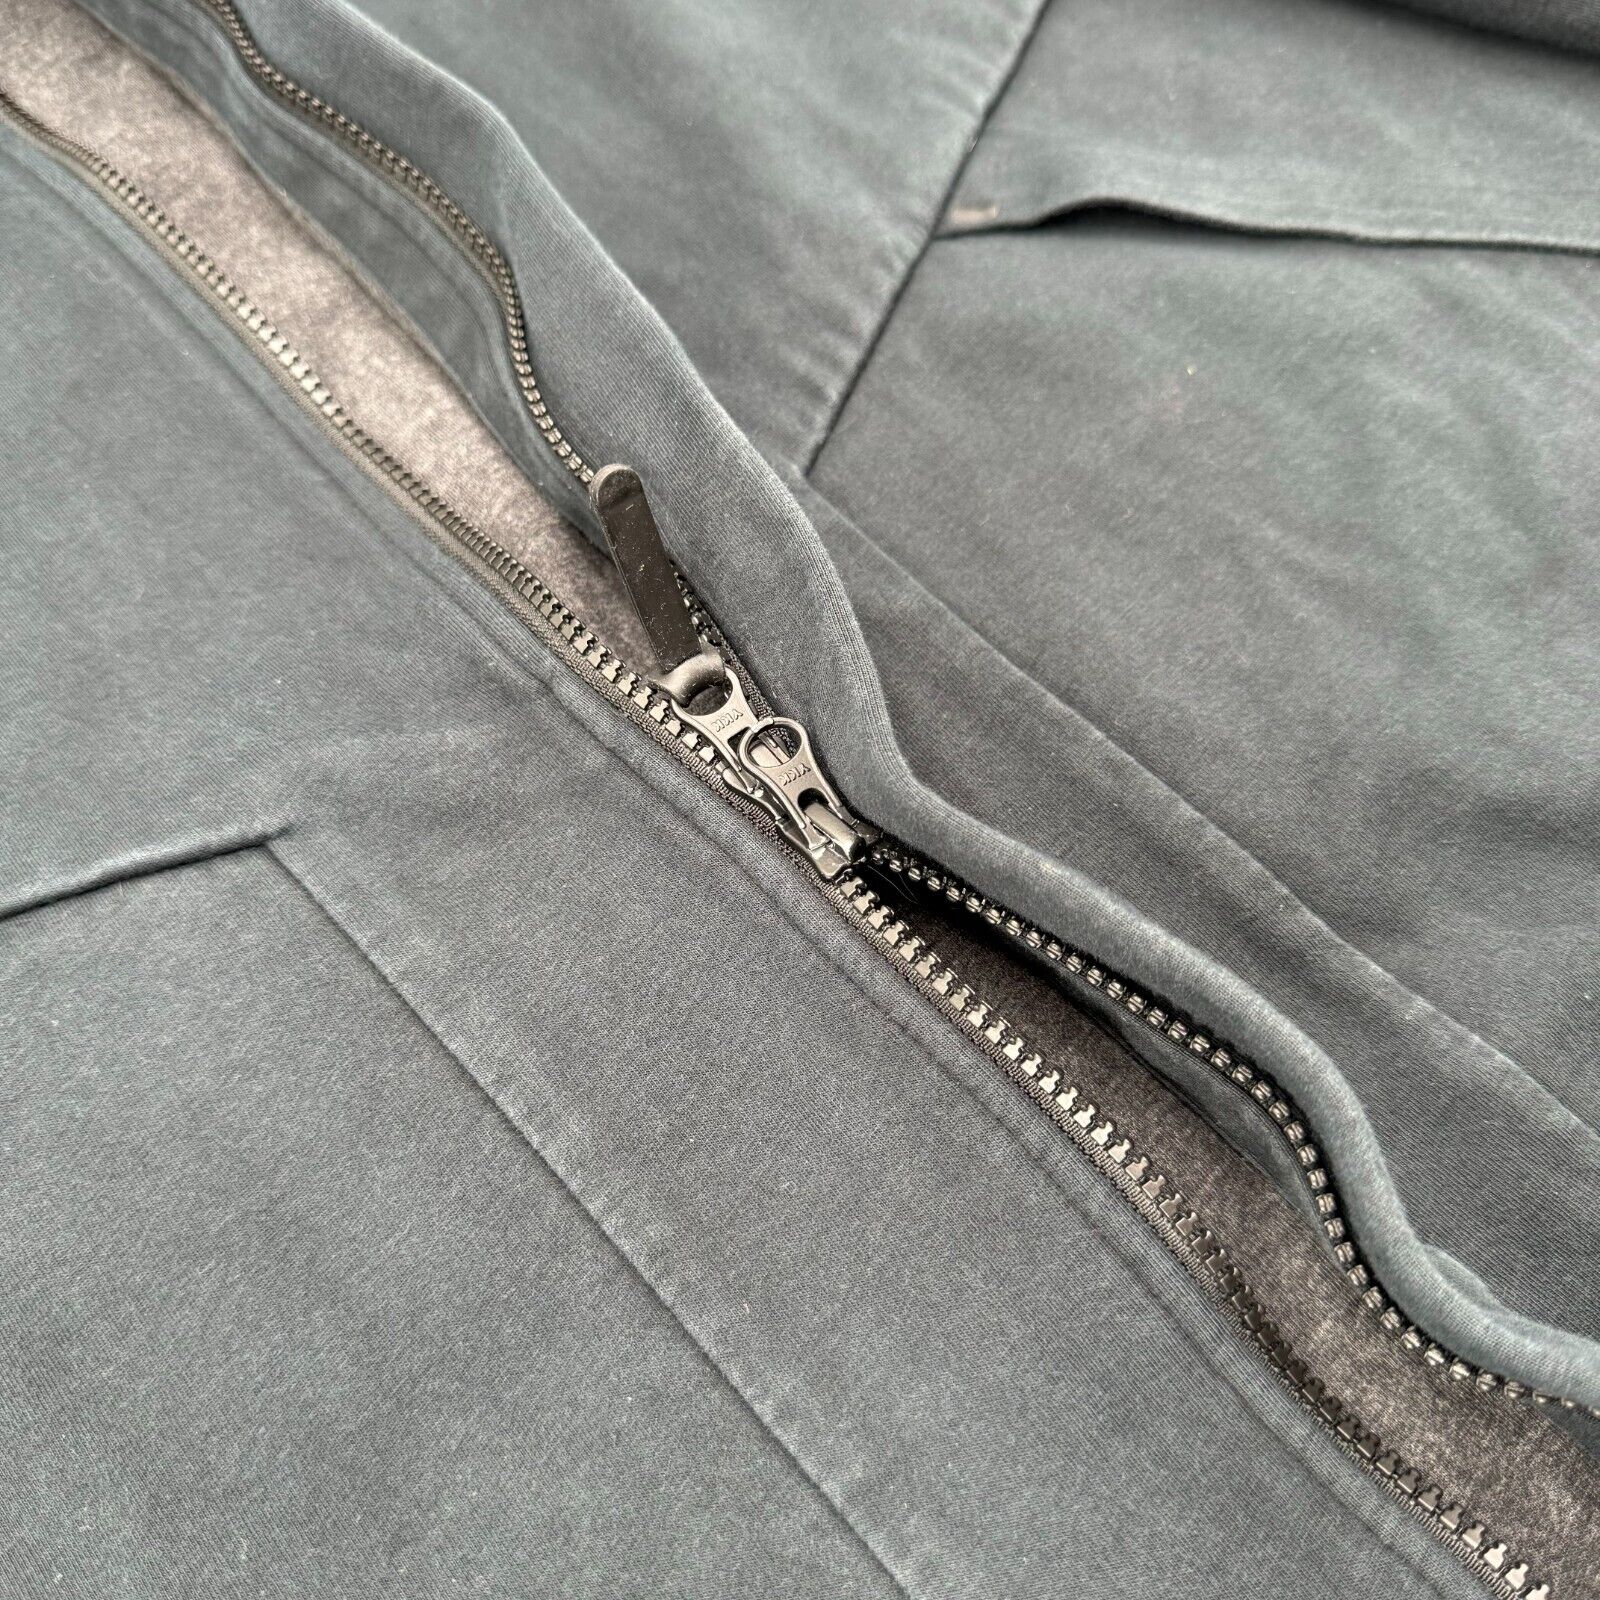 Nike Custom Tech Athletic Jacket Hooded Zip Water Repel Windproof Mens Size XL